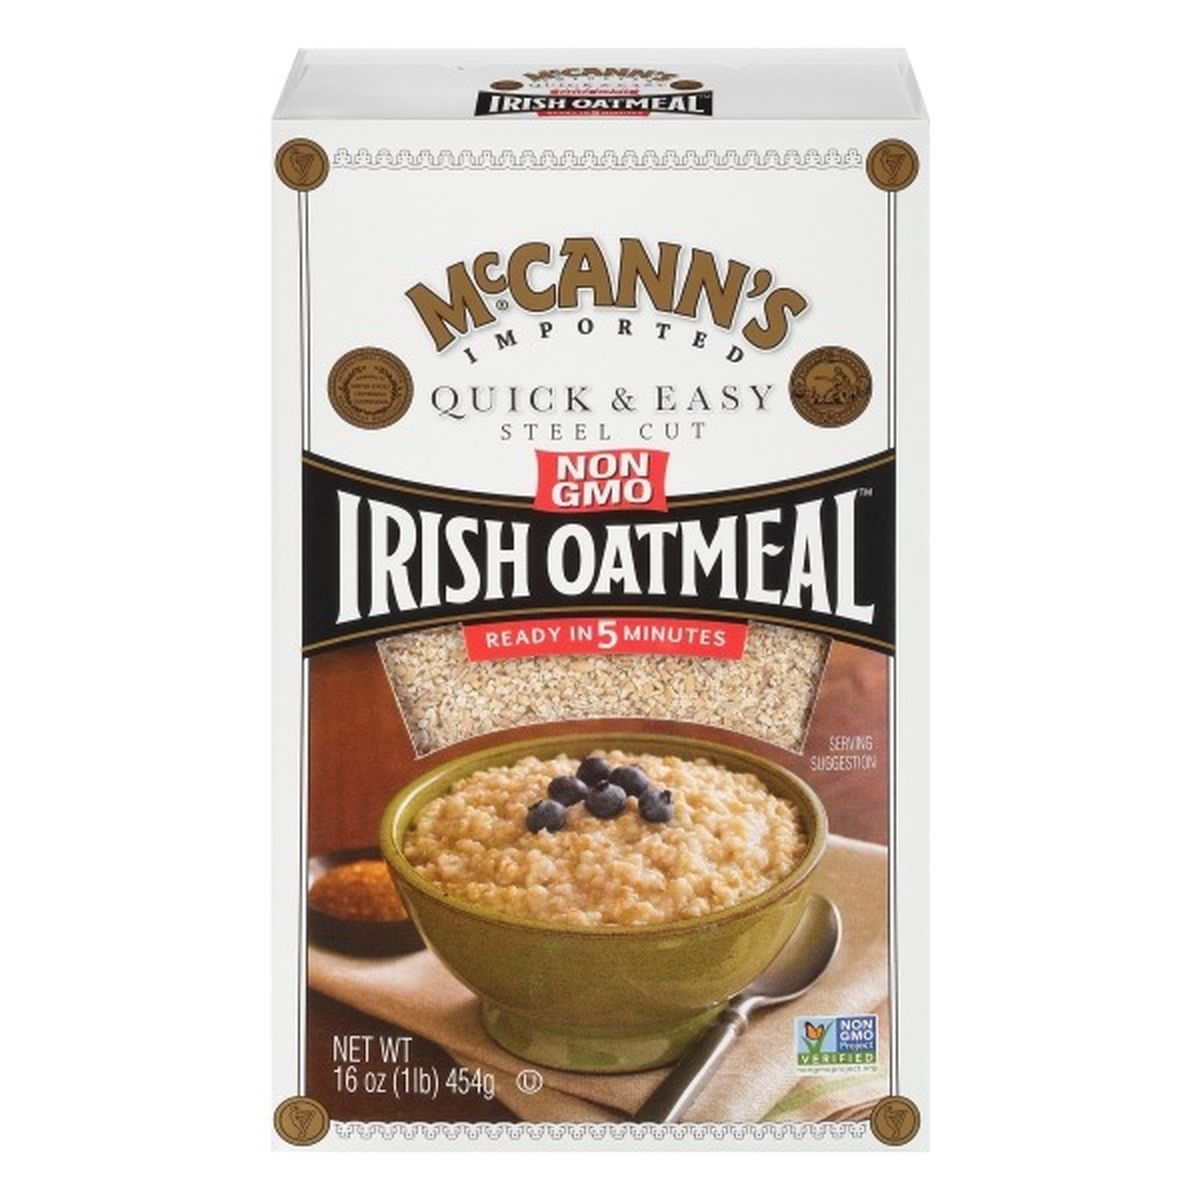 Calories in McCann's Irish Oatmeal, Steel Cut, Quick & Easy